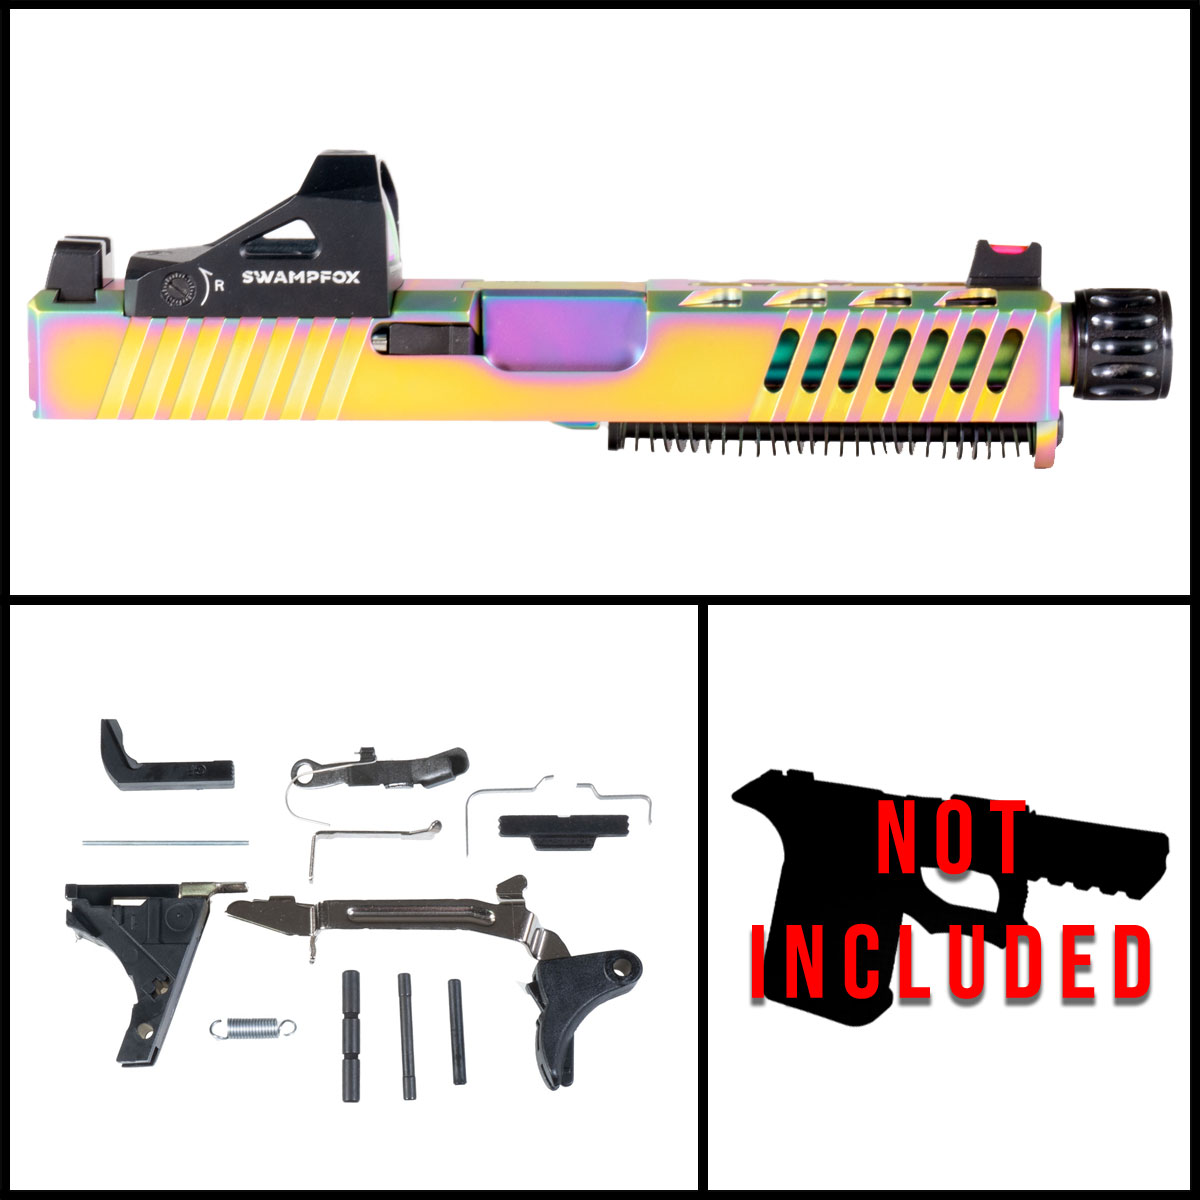 OTD 'Lumina w/ Swampfox Justice RMR' 9mm Full Pistol Build Kits (Everything Minus Frame) - Glock 19 Gen 1-2 Compatible